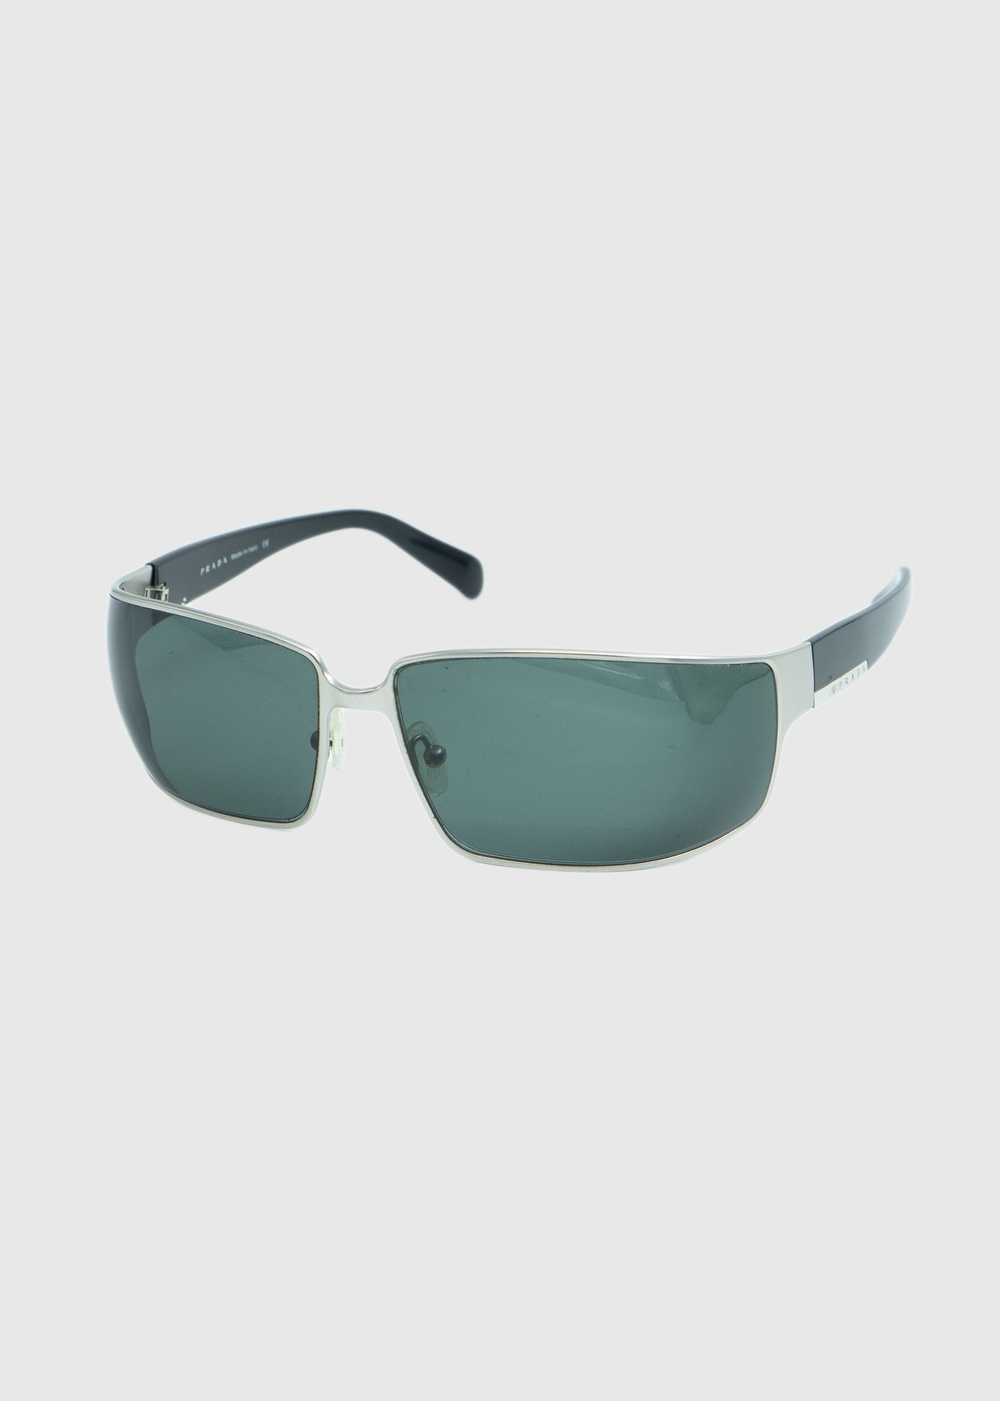 Prada PRADA SPR54F Silver Sunglasses Vintage 90s … - image 1